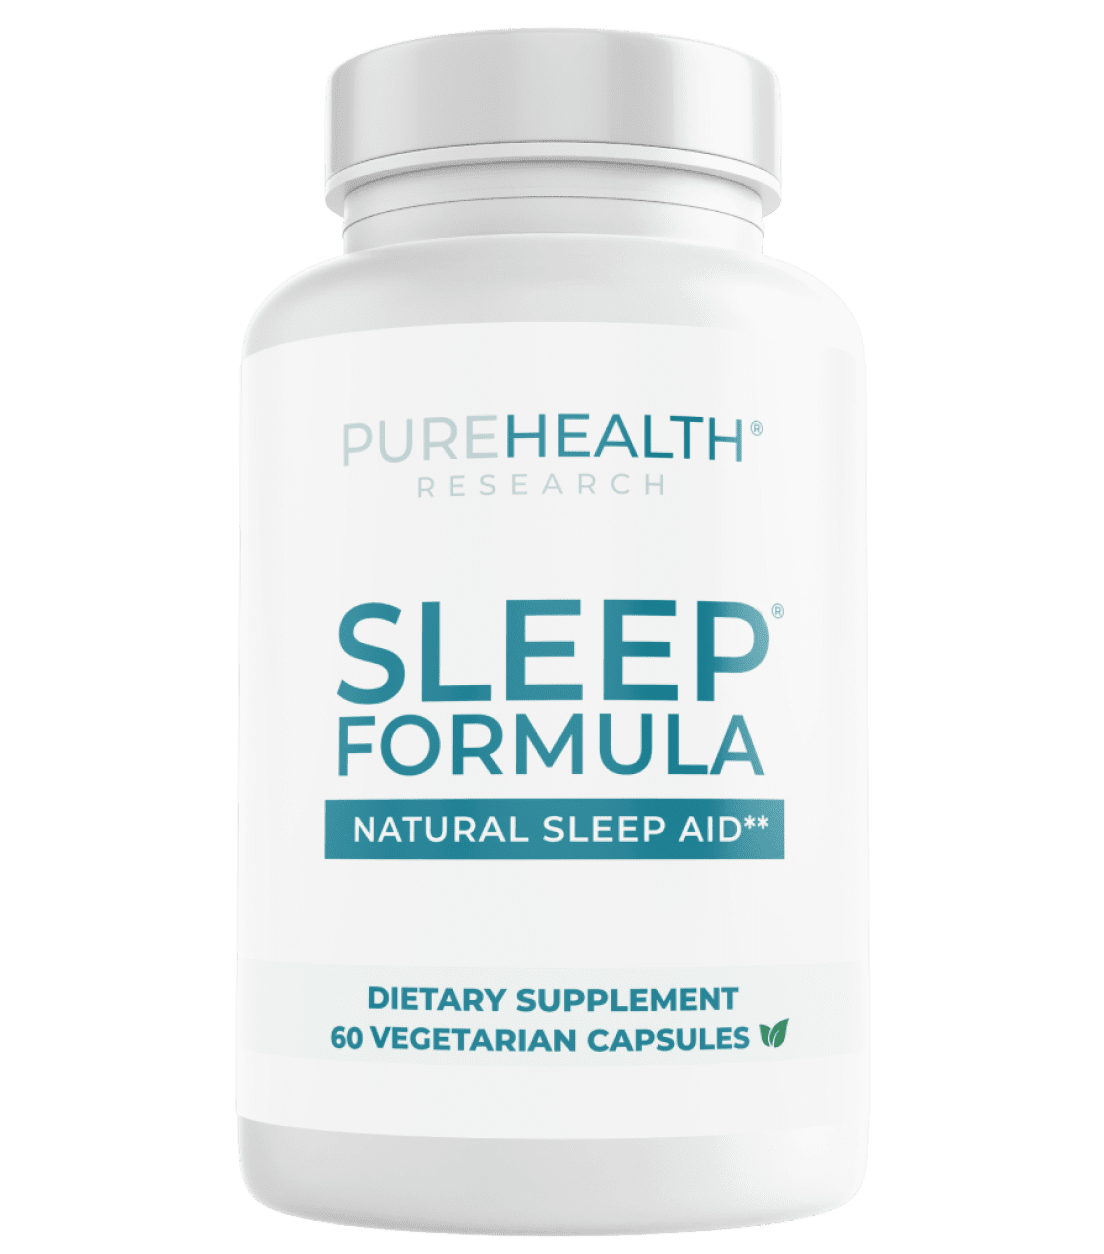 Sleep Formula Reviews